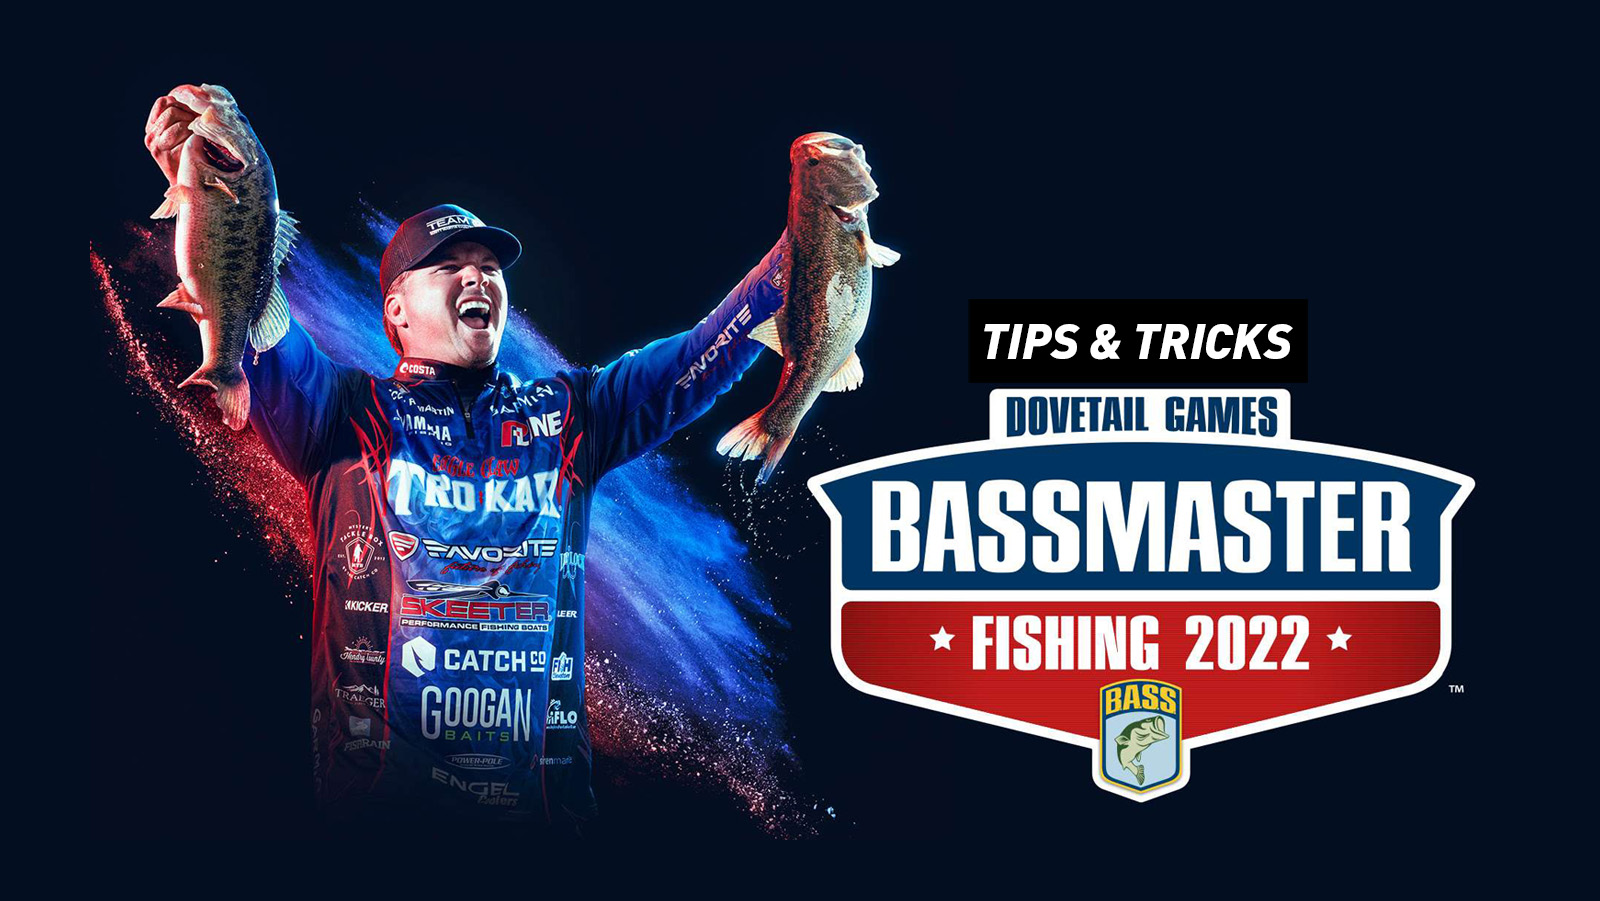 Bassmaster Fishing 2022 – Tips and Tricks